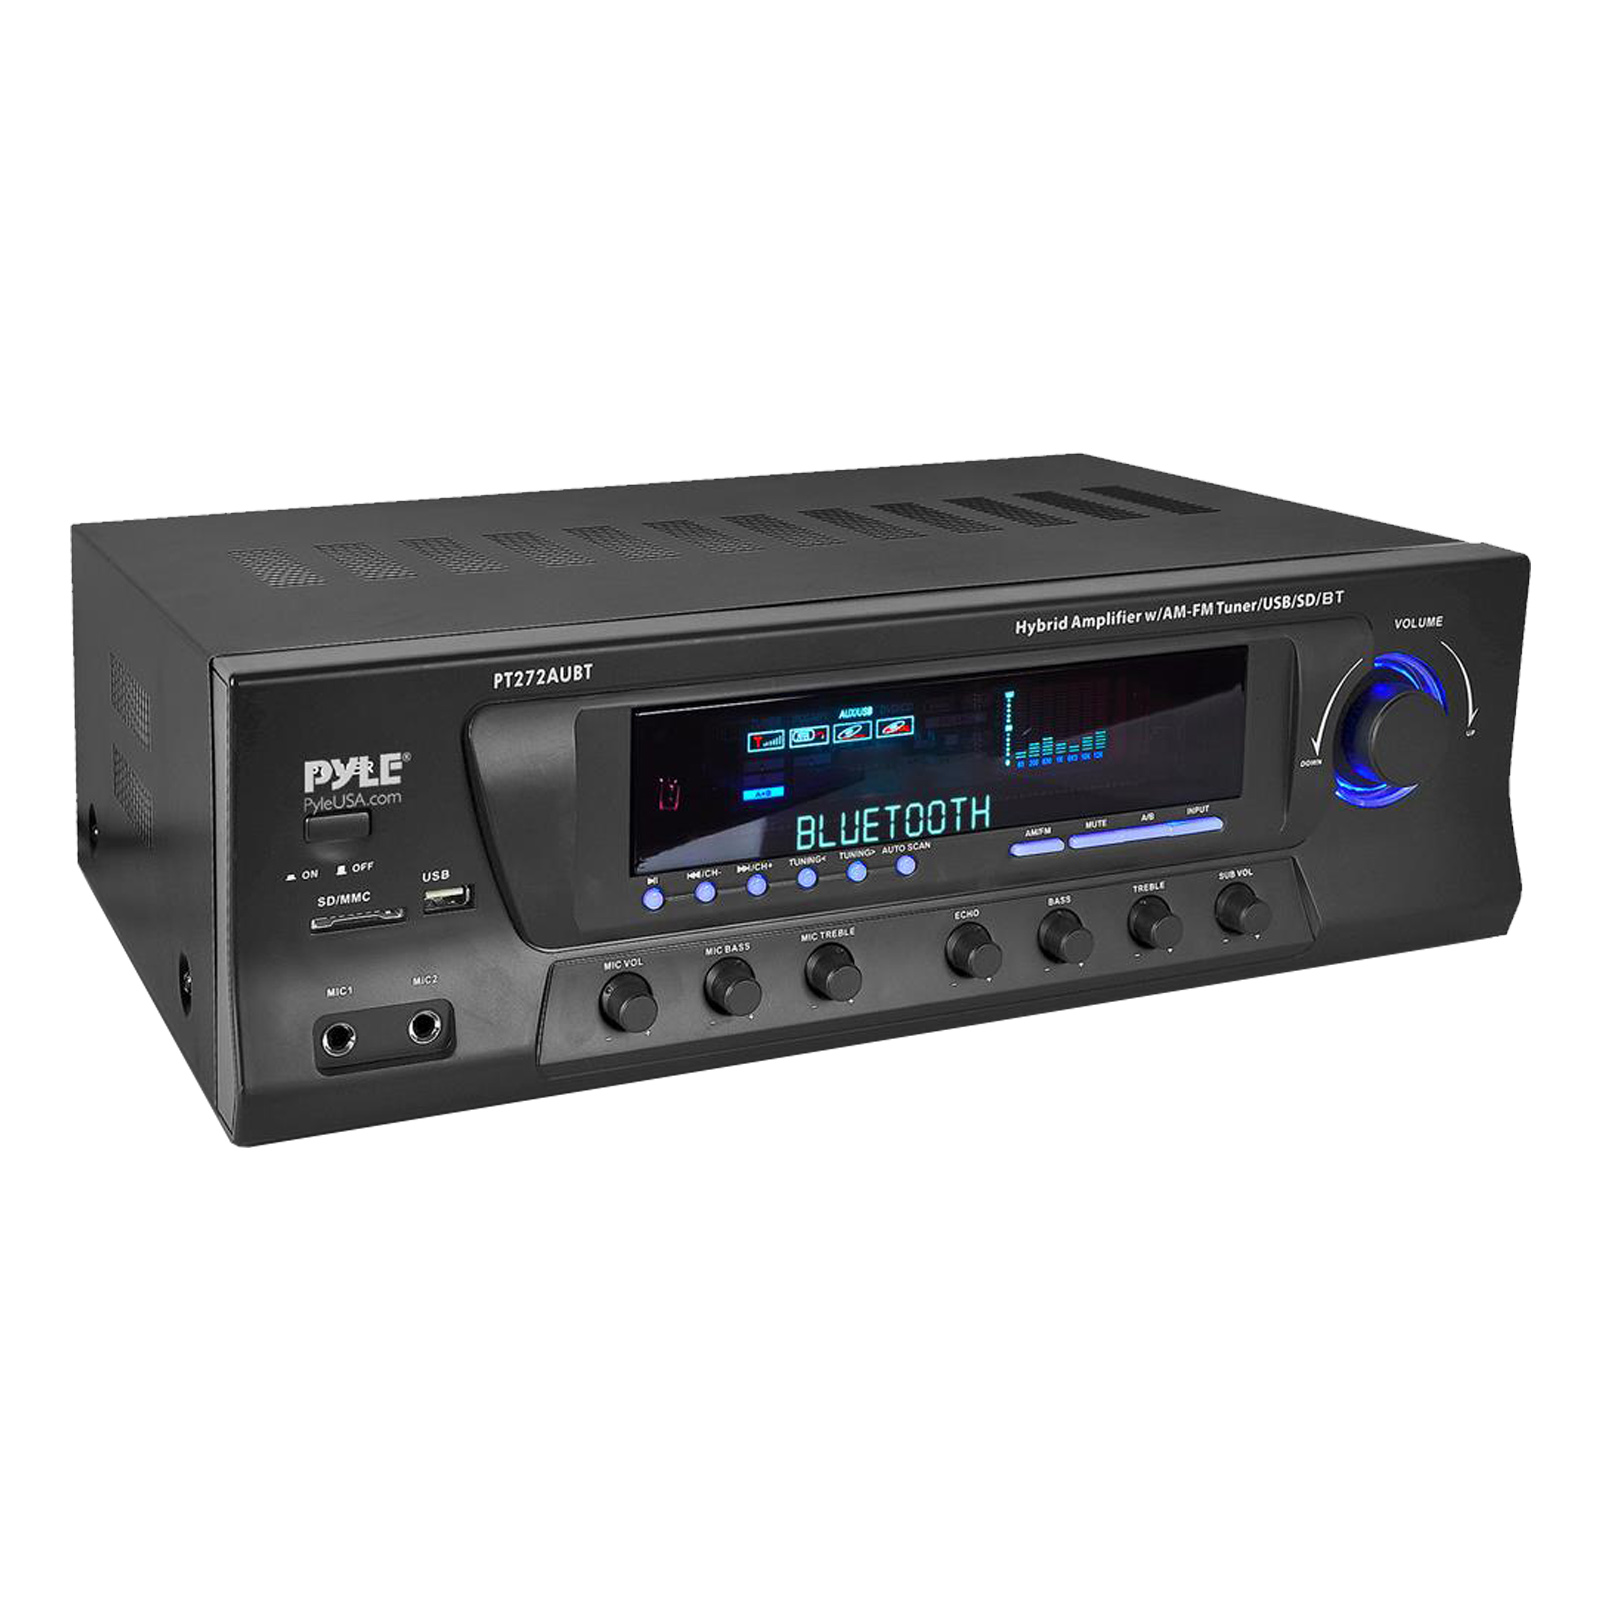 Pyle 300 Watt Stereo Amplifier Receiver USB/SD,Bluetooth AM-FM Tuner